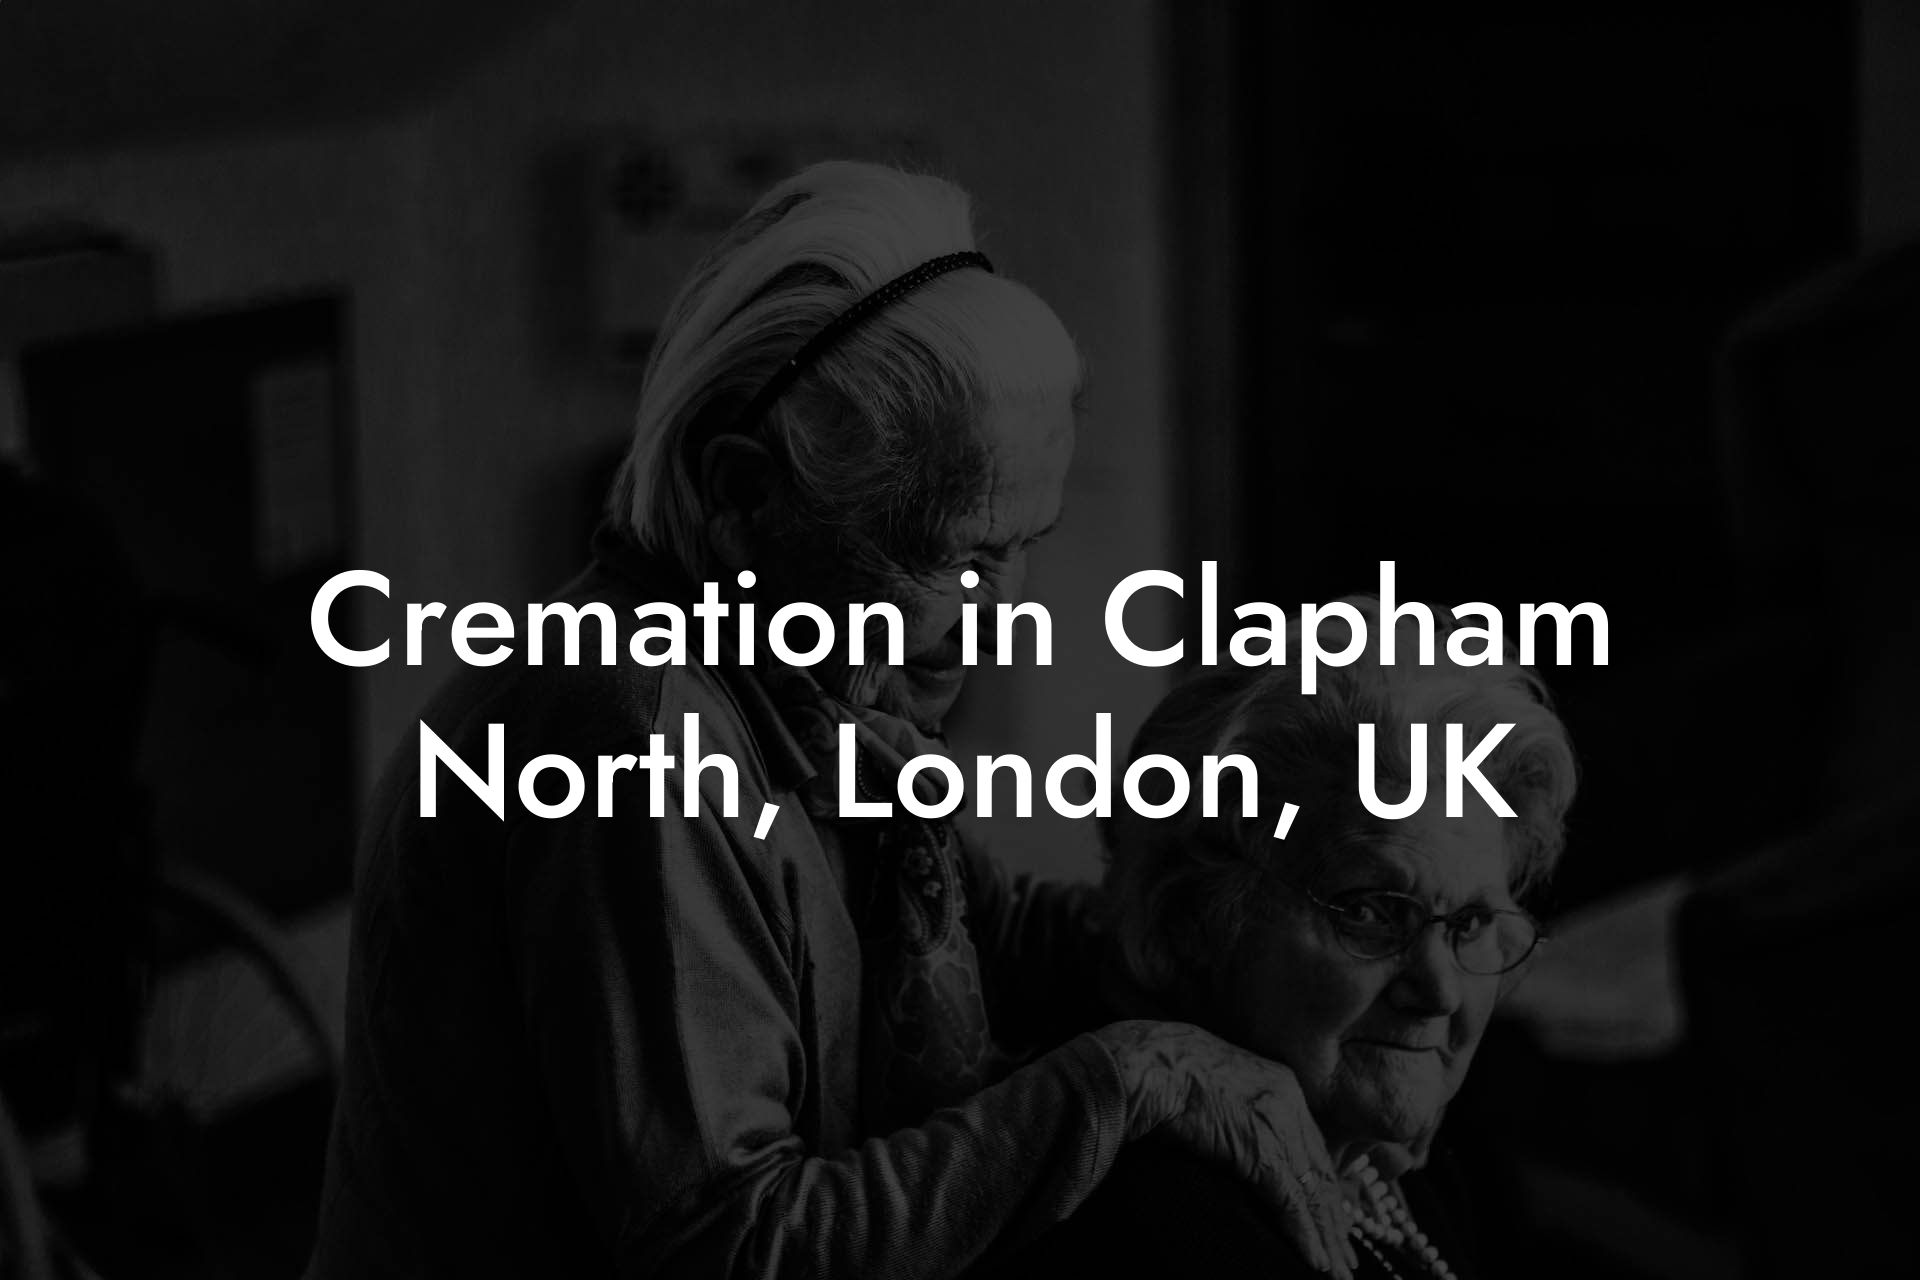 Cremation in Clapham North, London, UK